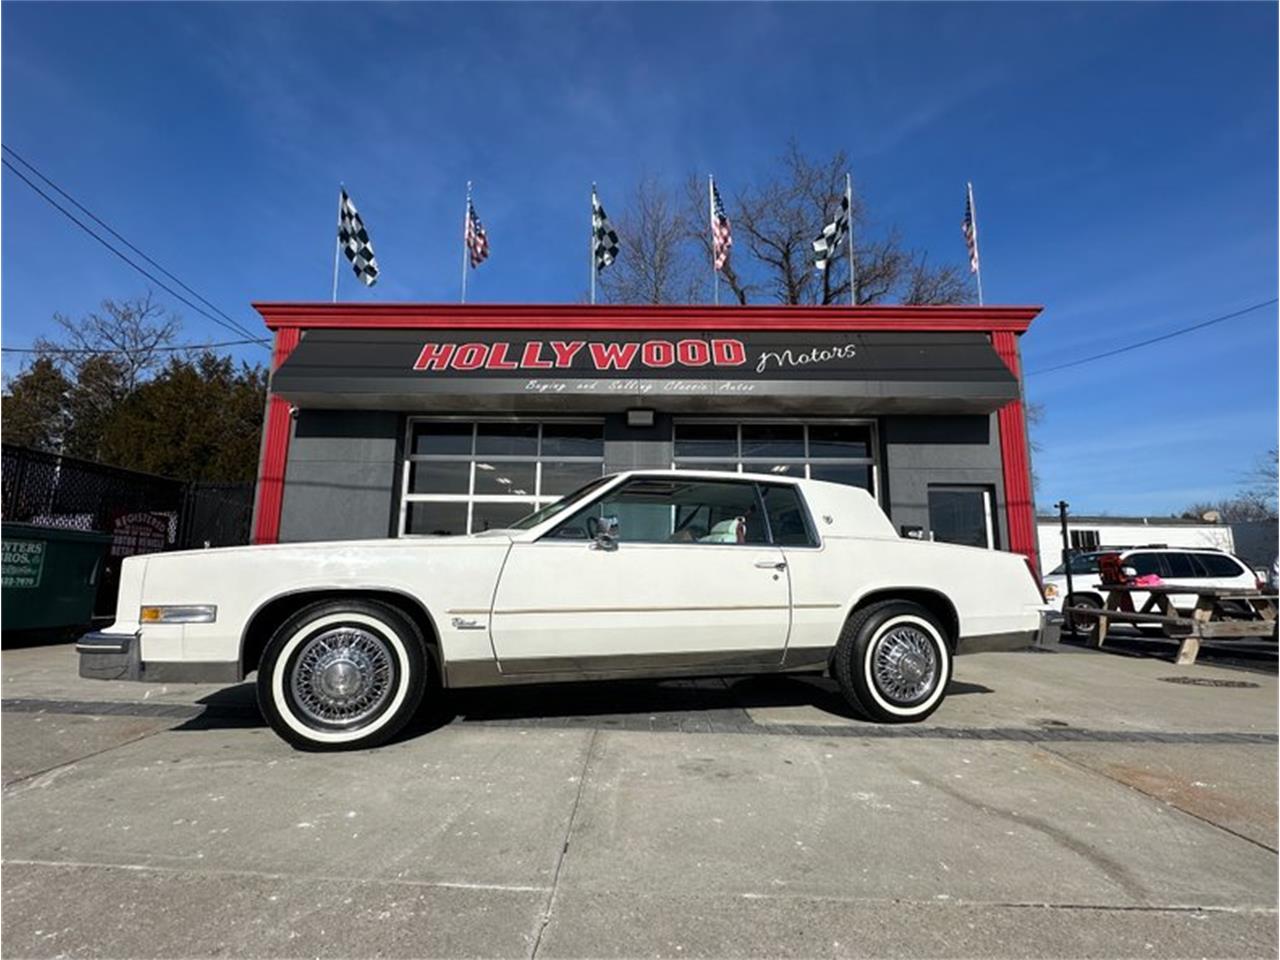 For Sale: 1980 Cadillac Eldorado in West Babylon, New York for sale in West Babylon, NY